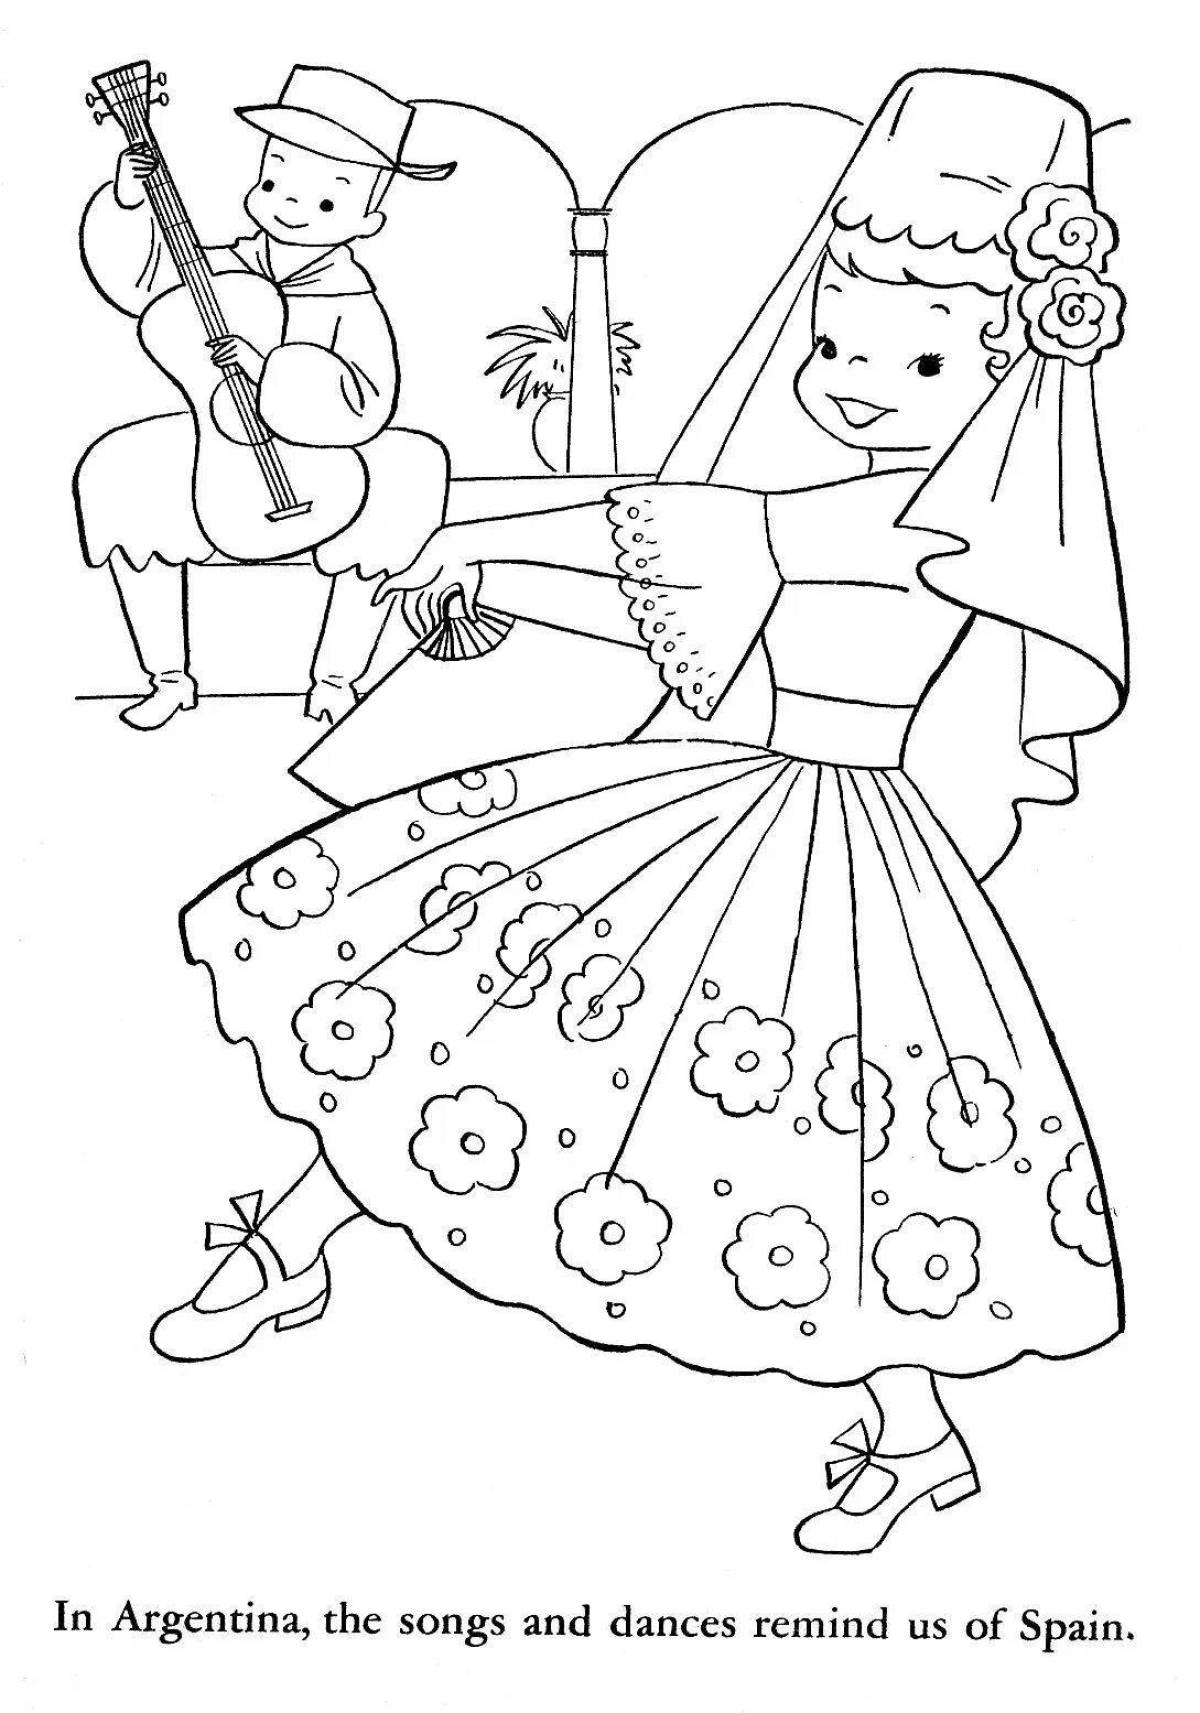 Coloring page nice folk dance